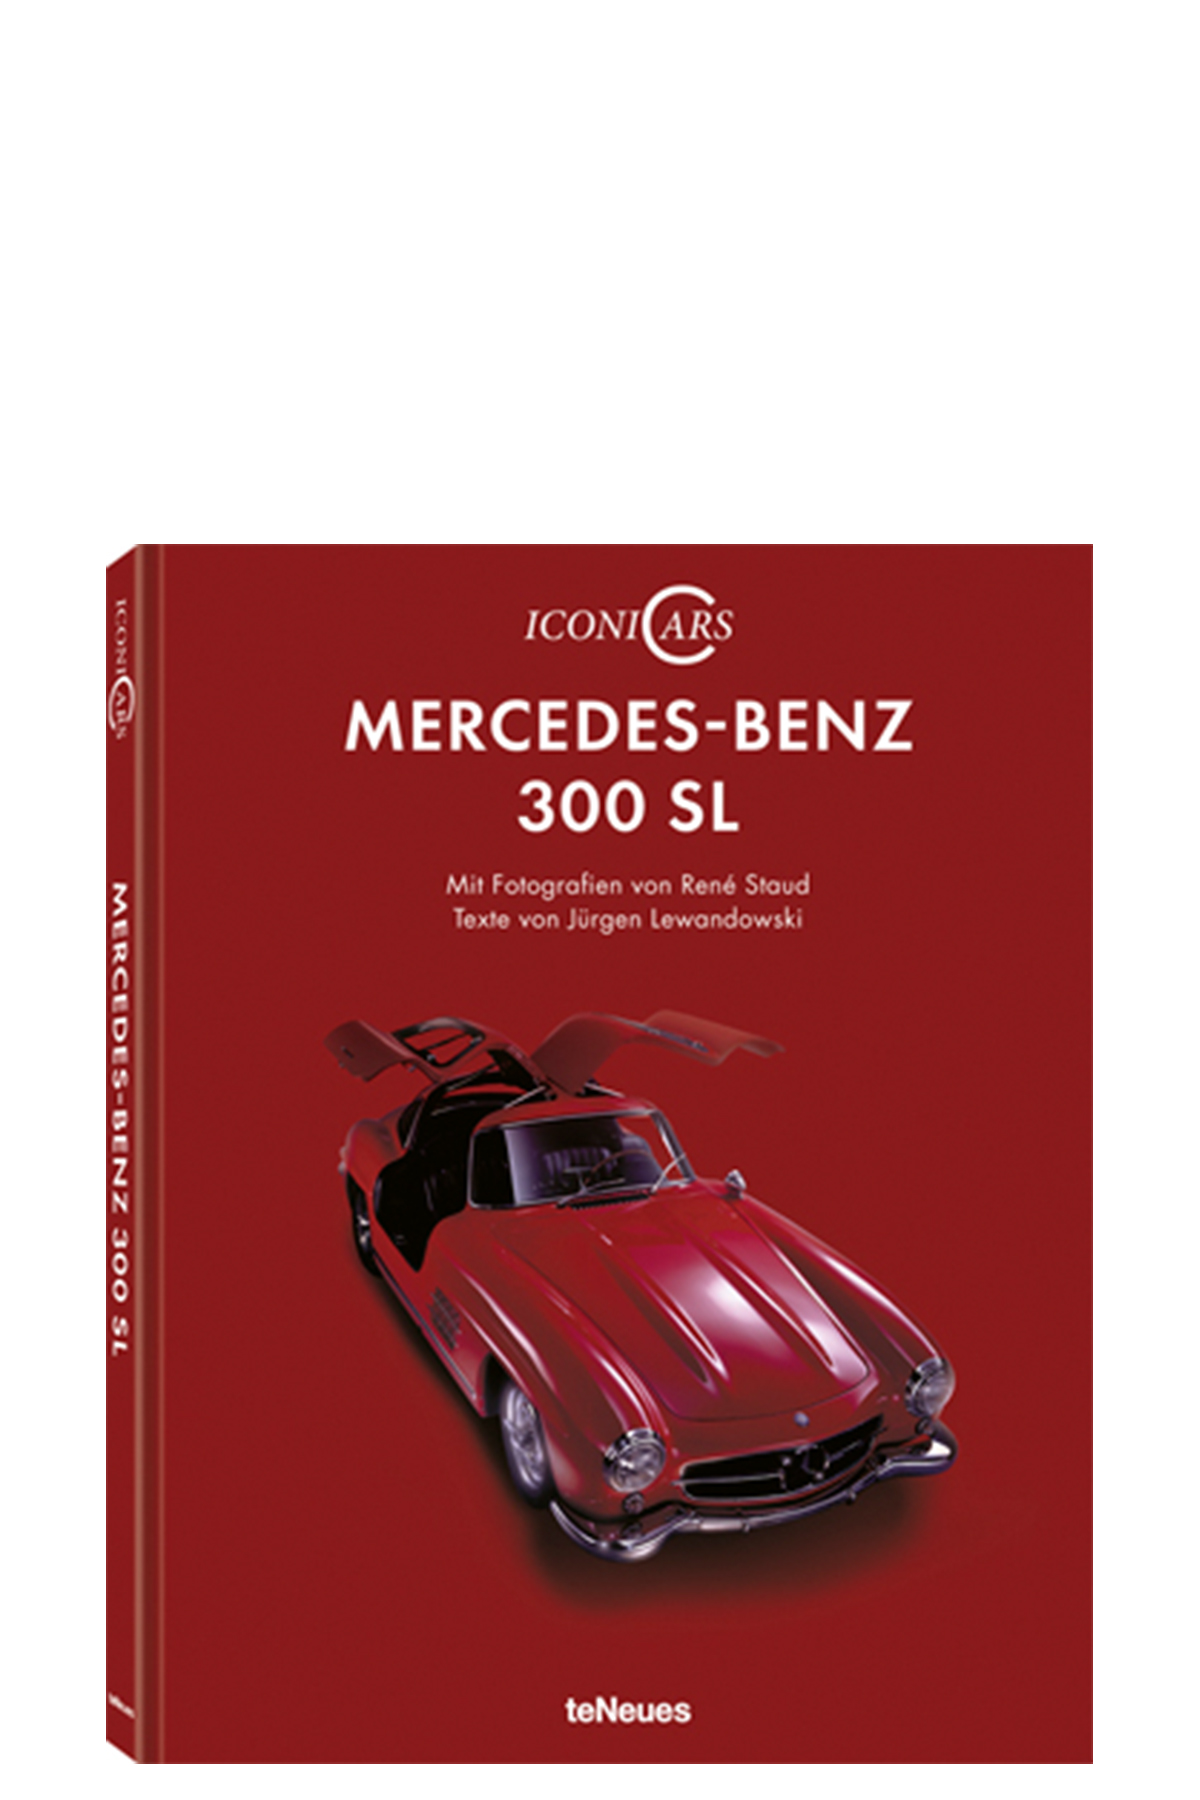 IconiCars Mercedes-Benz 300SL